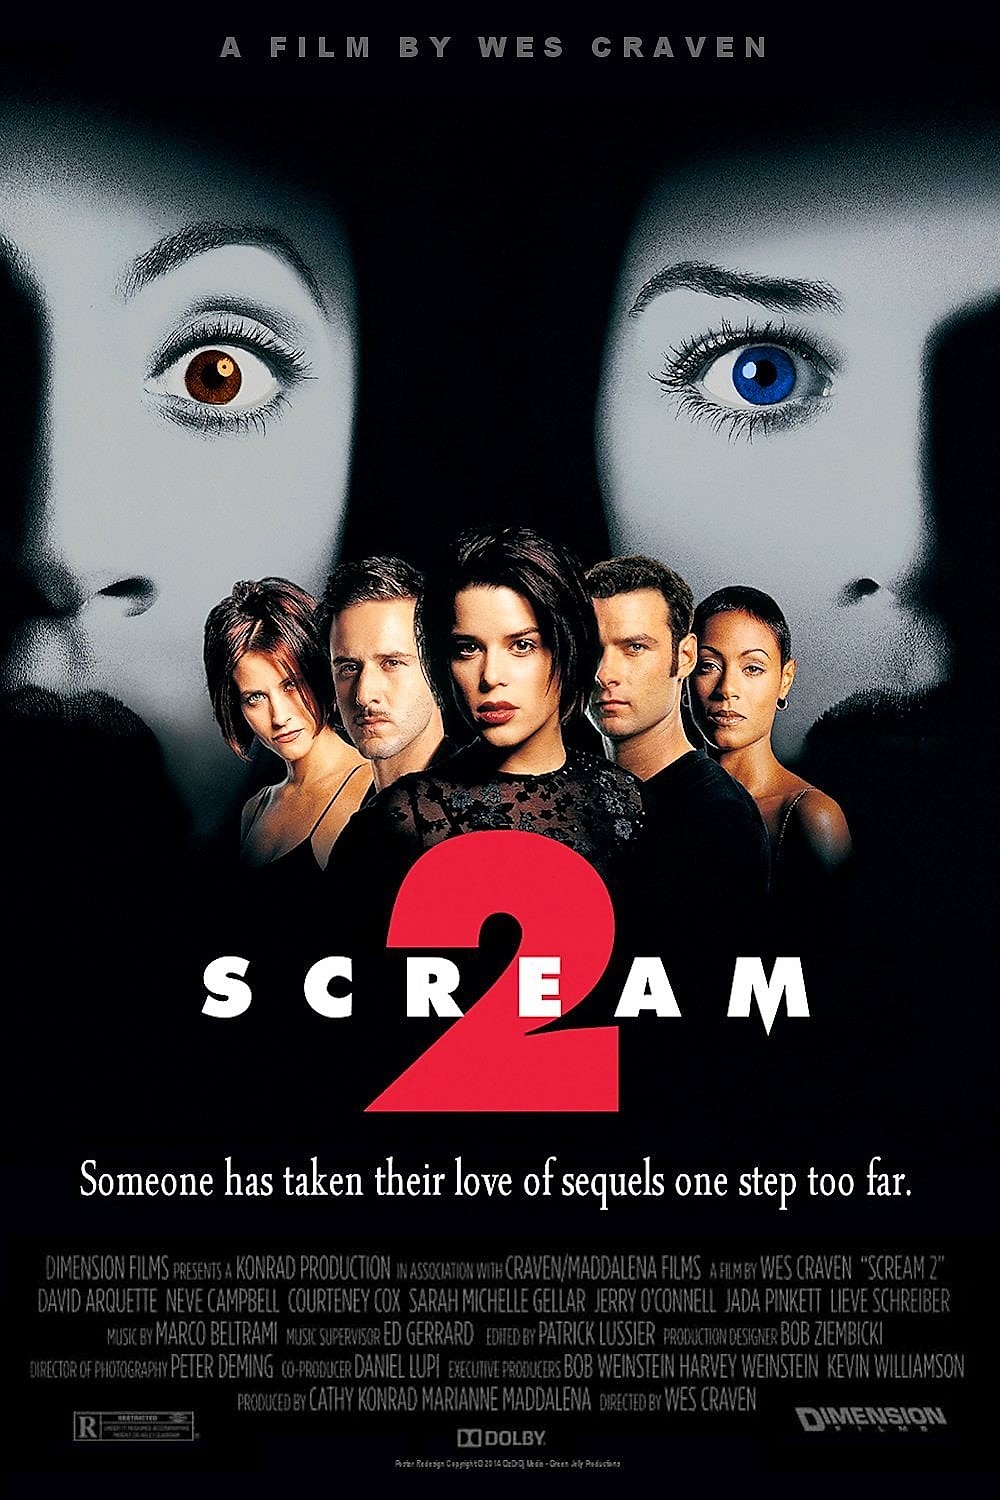 Nancy Loomis; Scream 2 (Provided by Miramax)